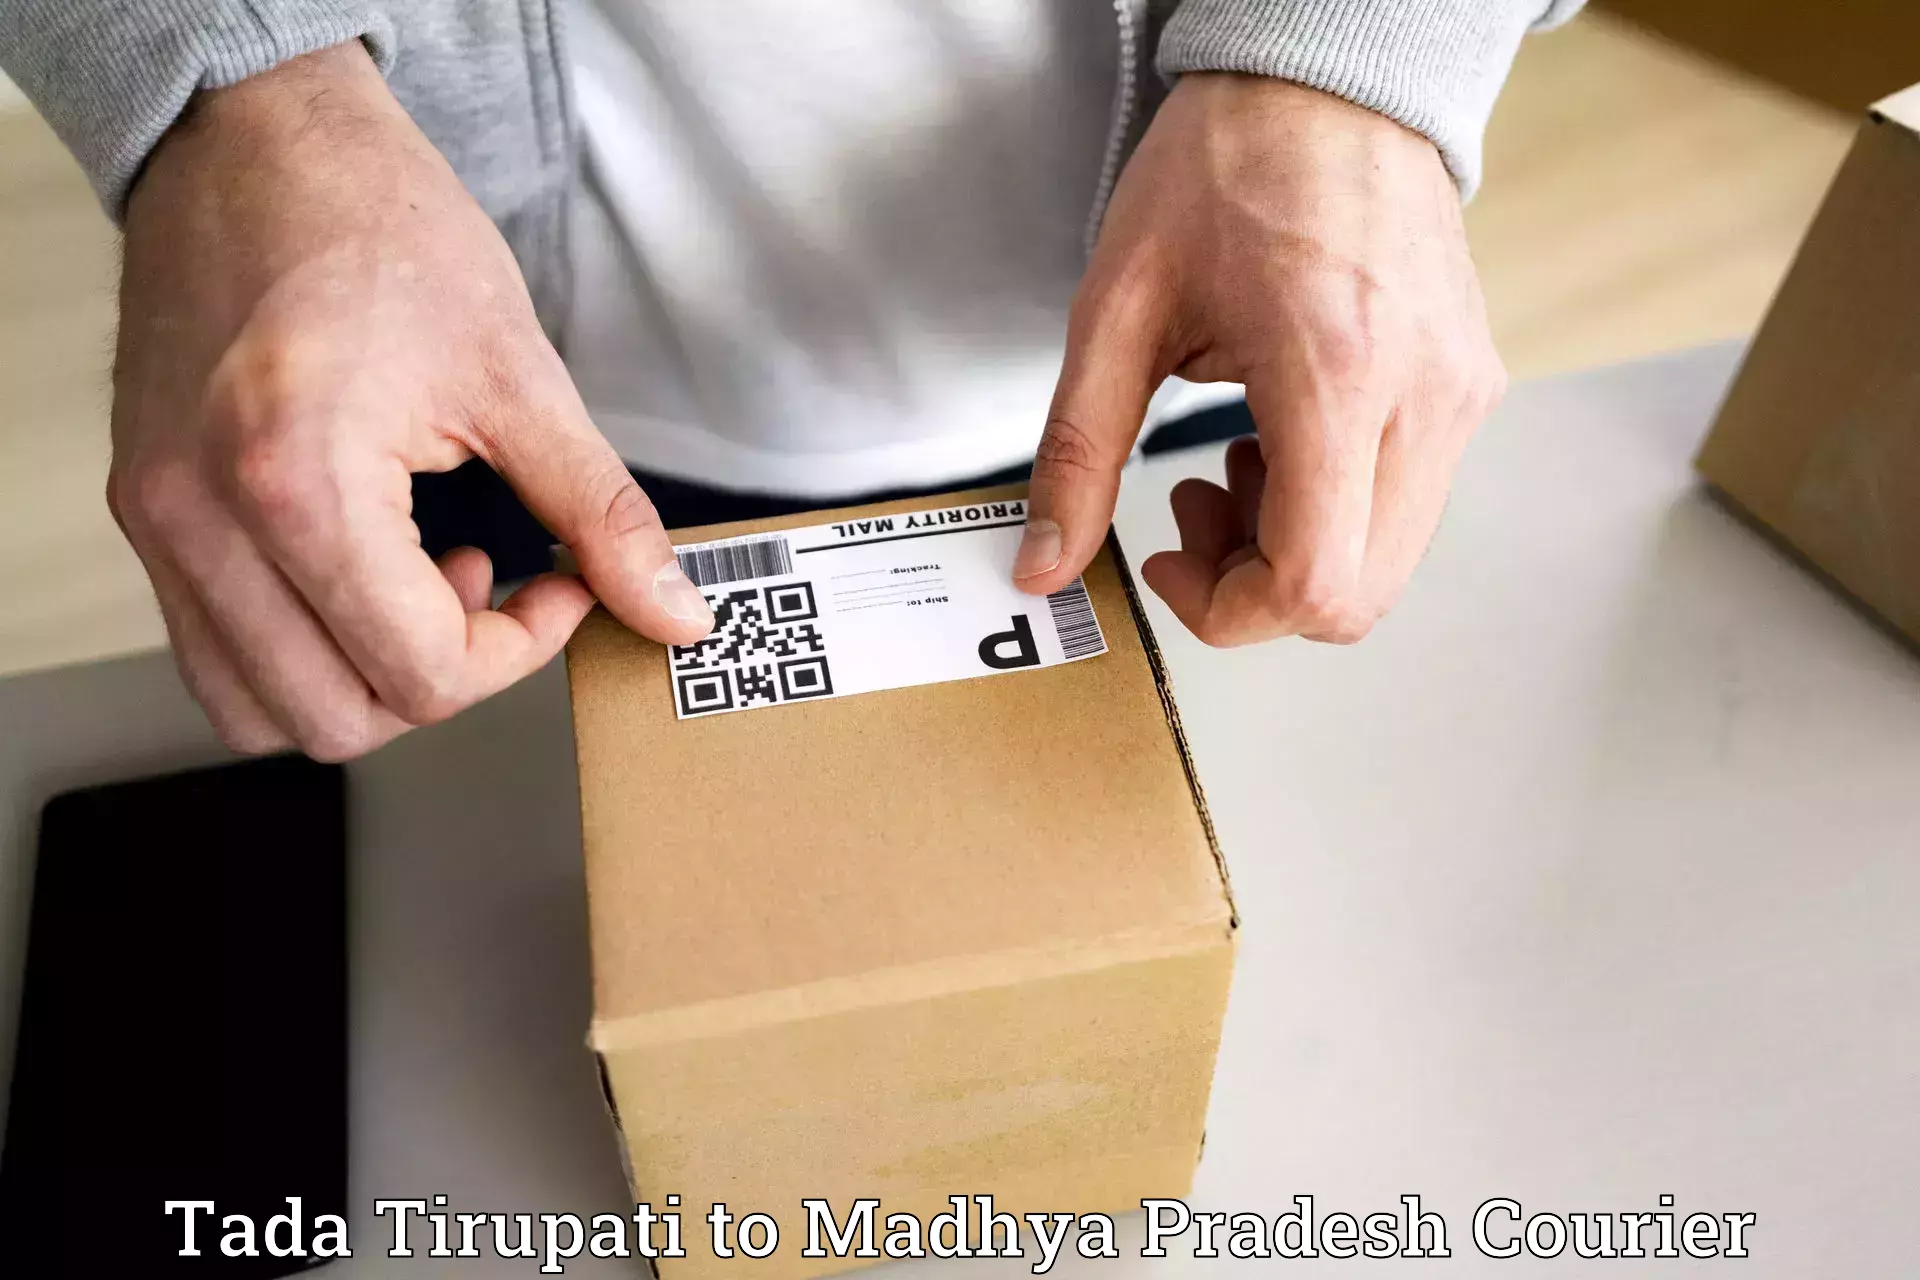 Cash on delivery service Tada Tirupati to Jaitwara